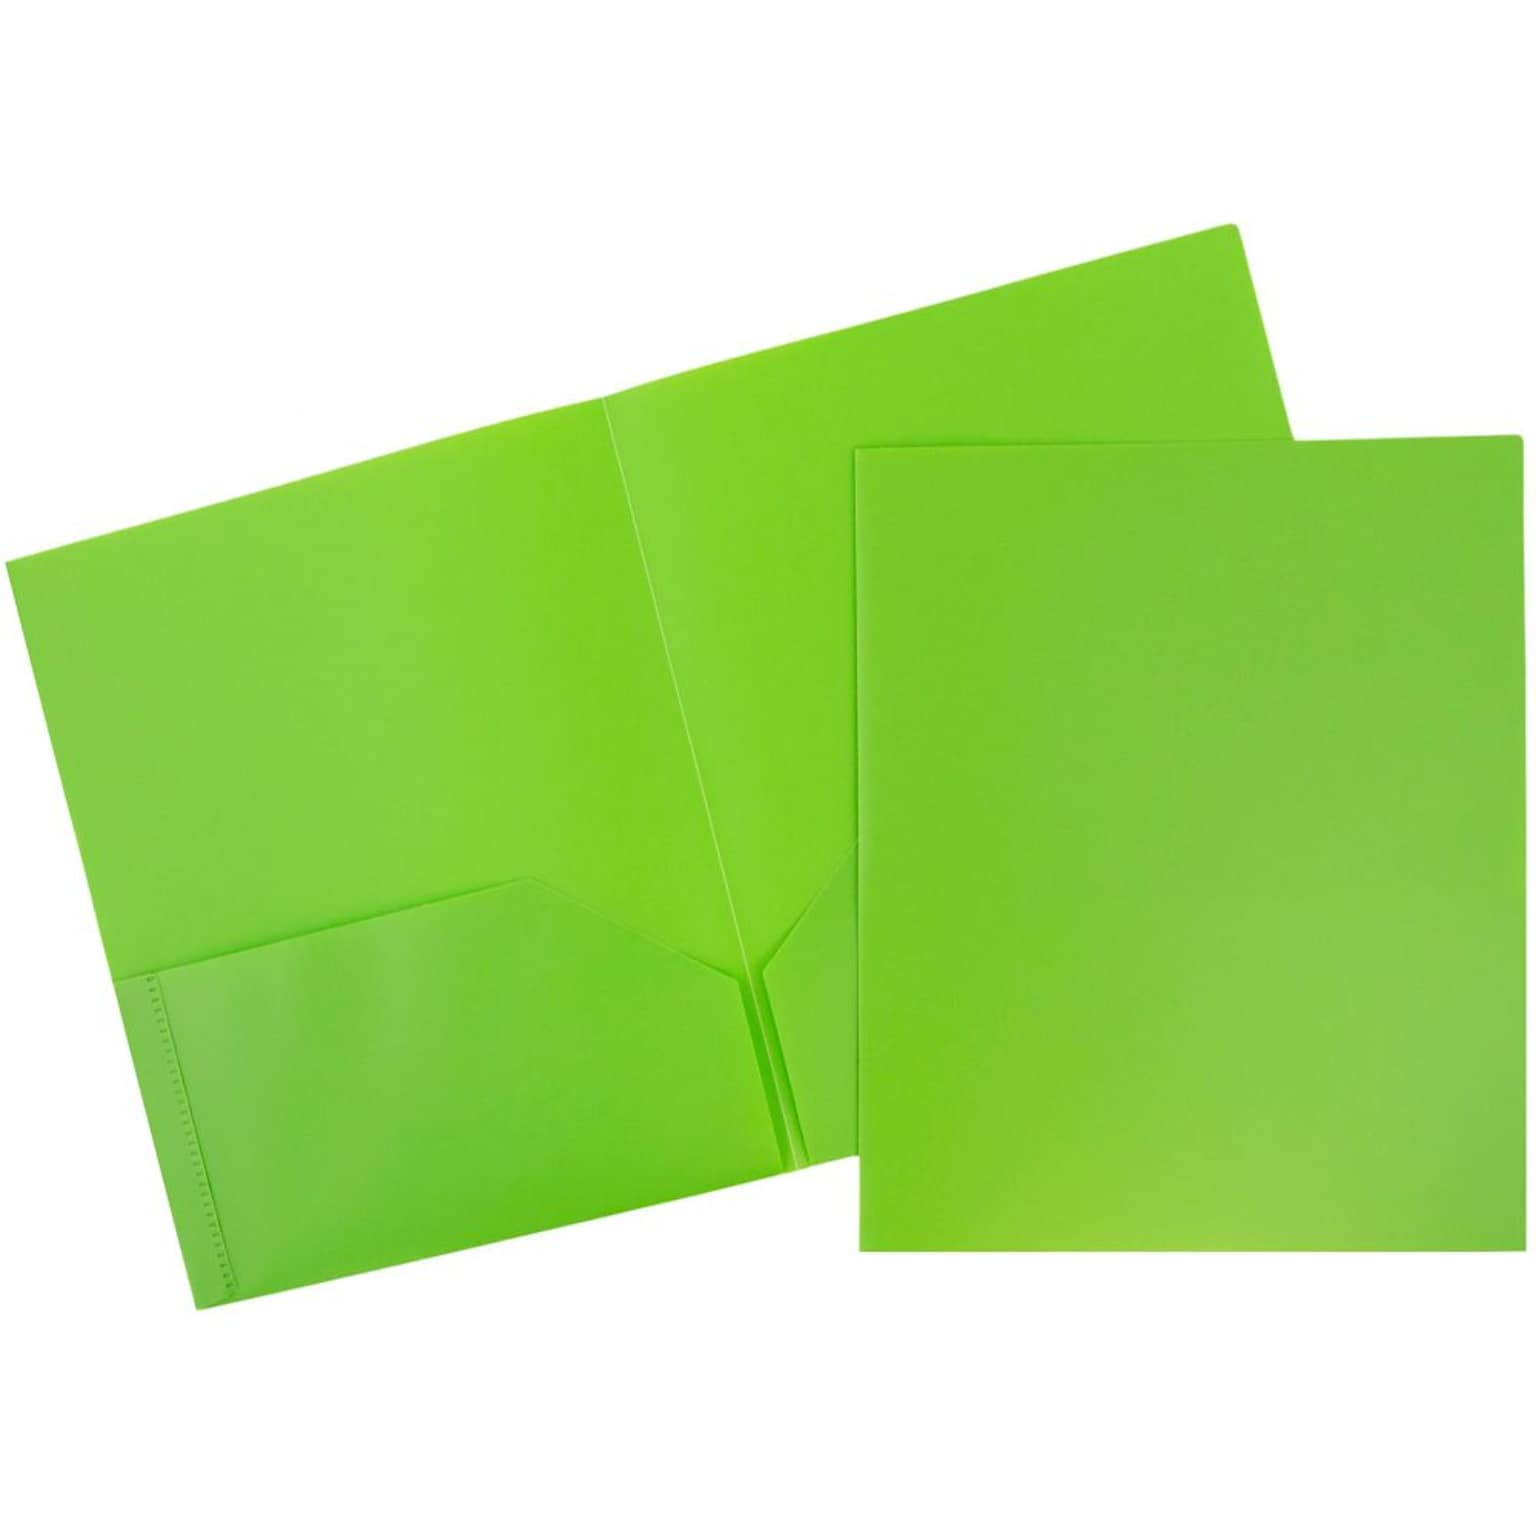 JAM Paper POP 2-Pocket Portfolio Plastic Folder, Lime Green, 96/Box (382ELIGRB)